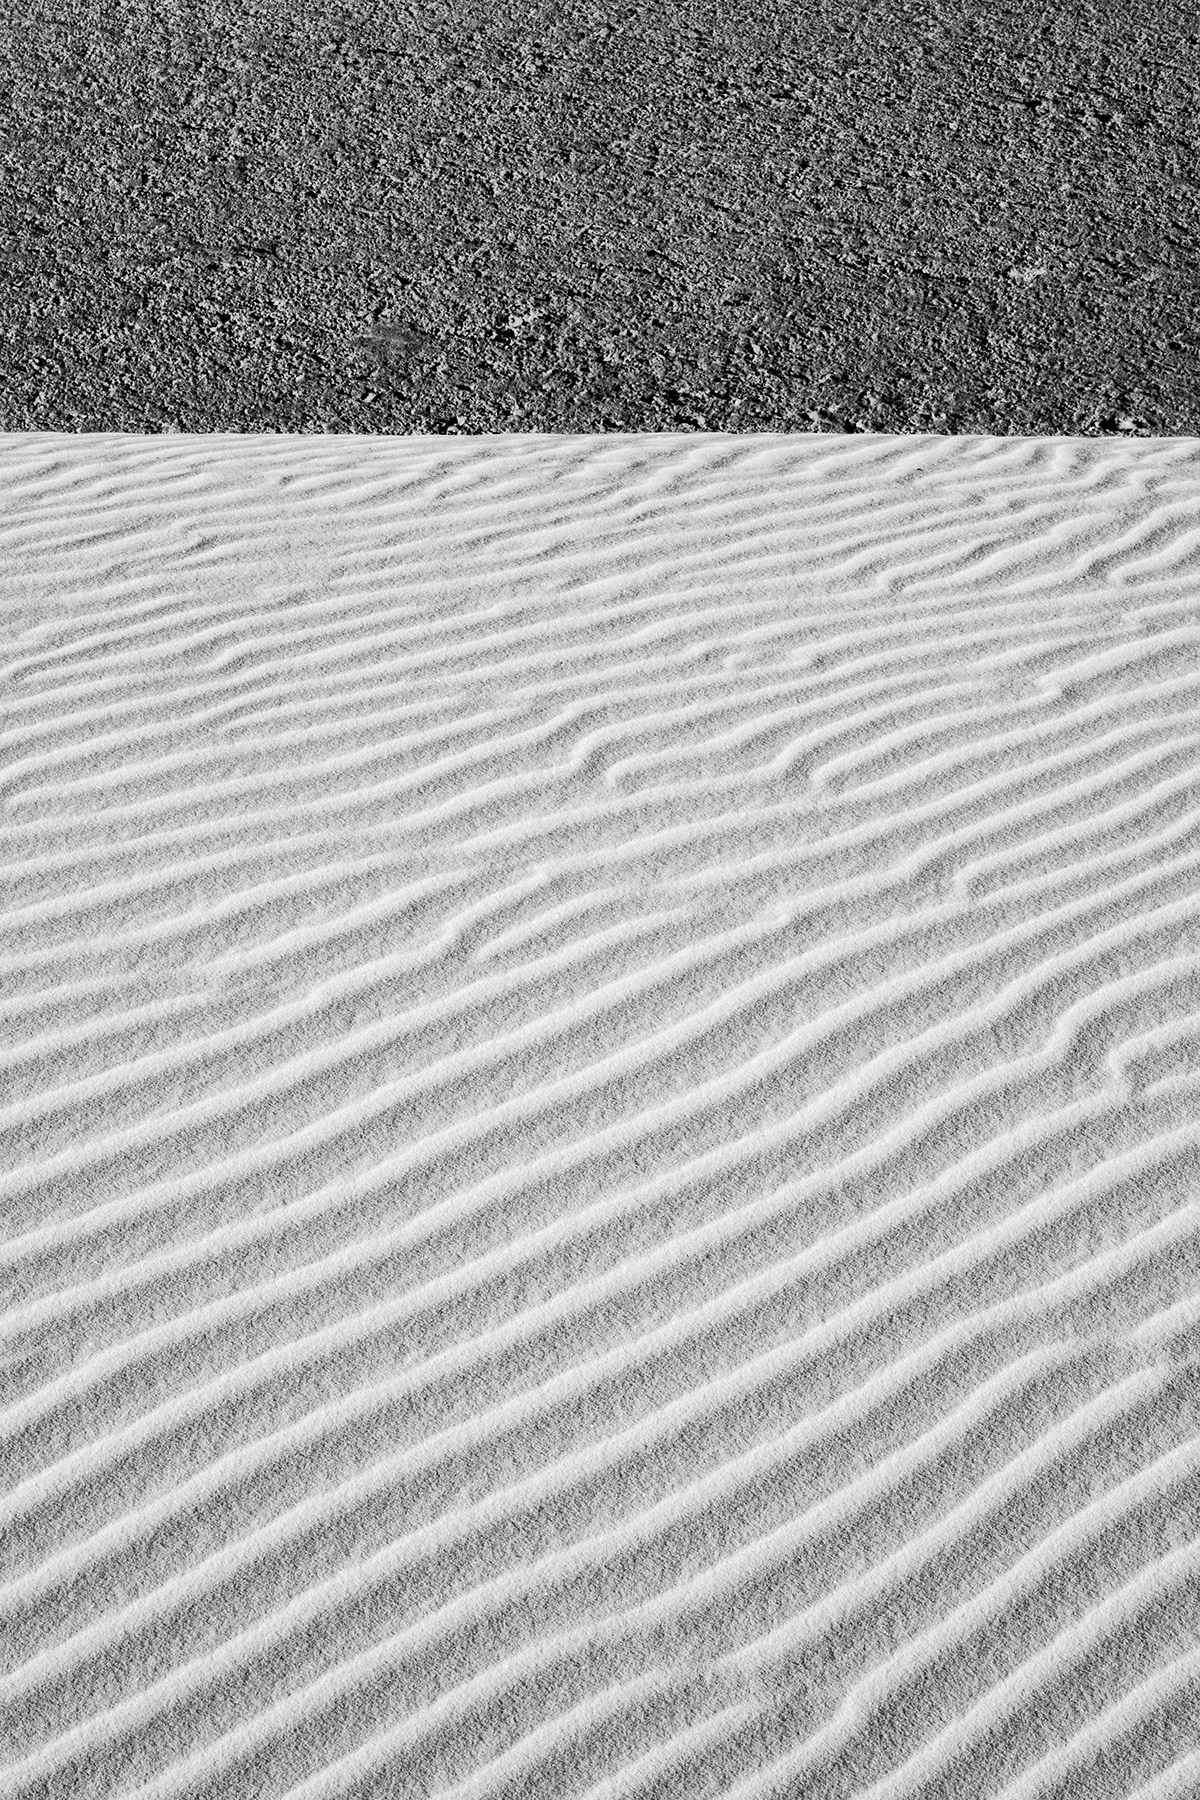 b&w black and white desert Landscape monochrome nathan spotts Nature Photography  sand surreal